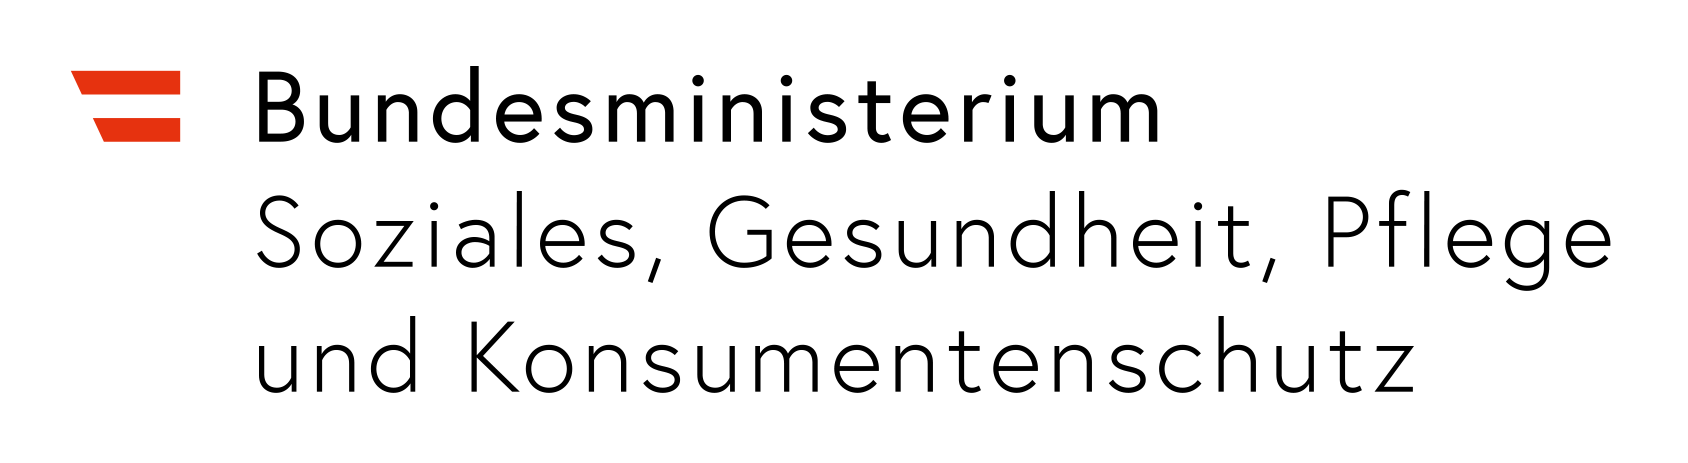 BMSGPK_Logo_srgb